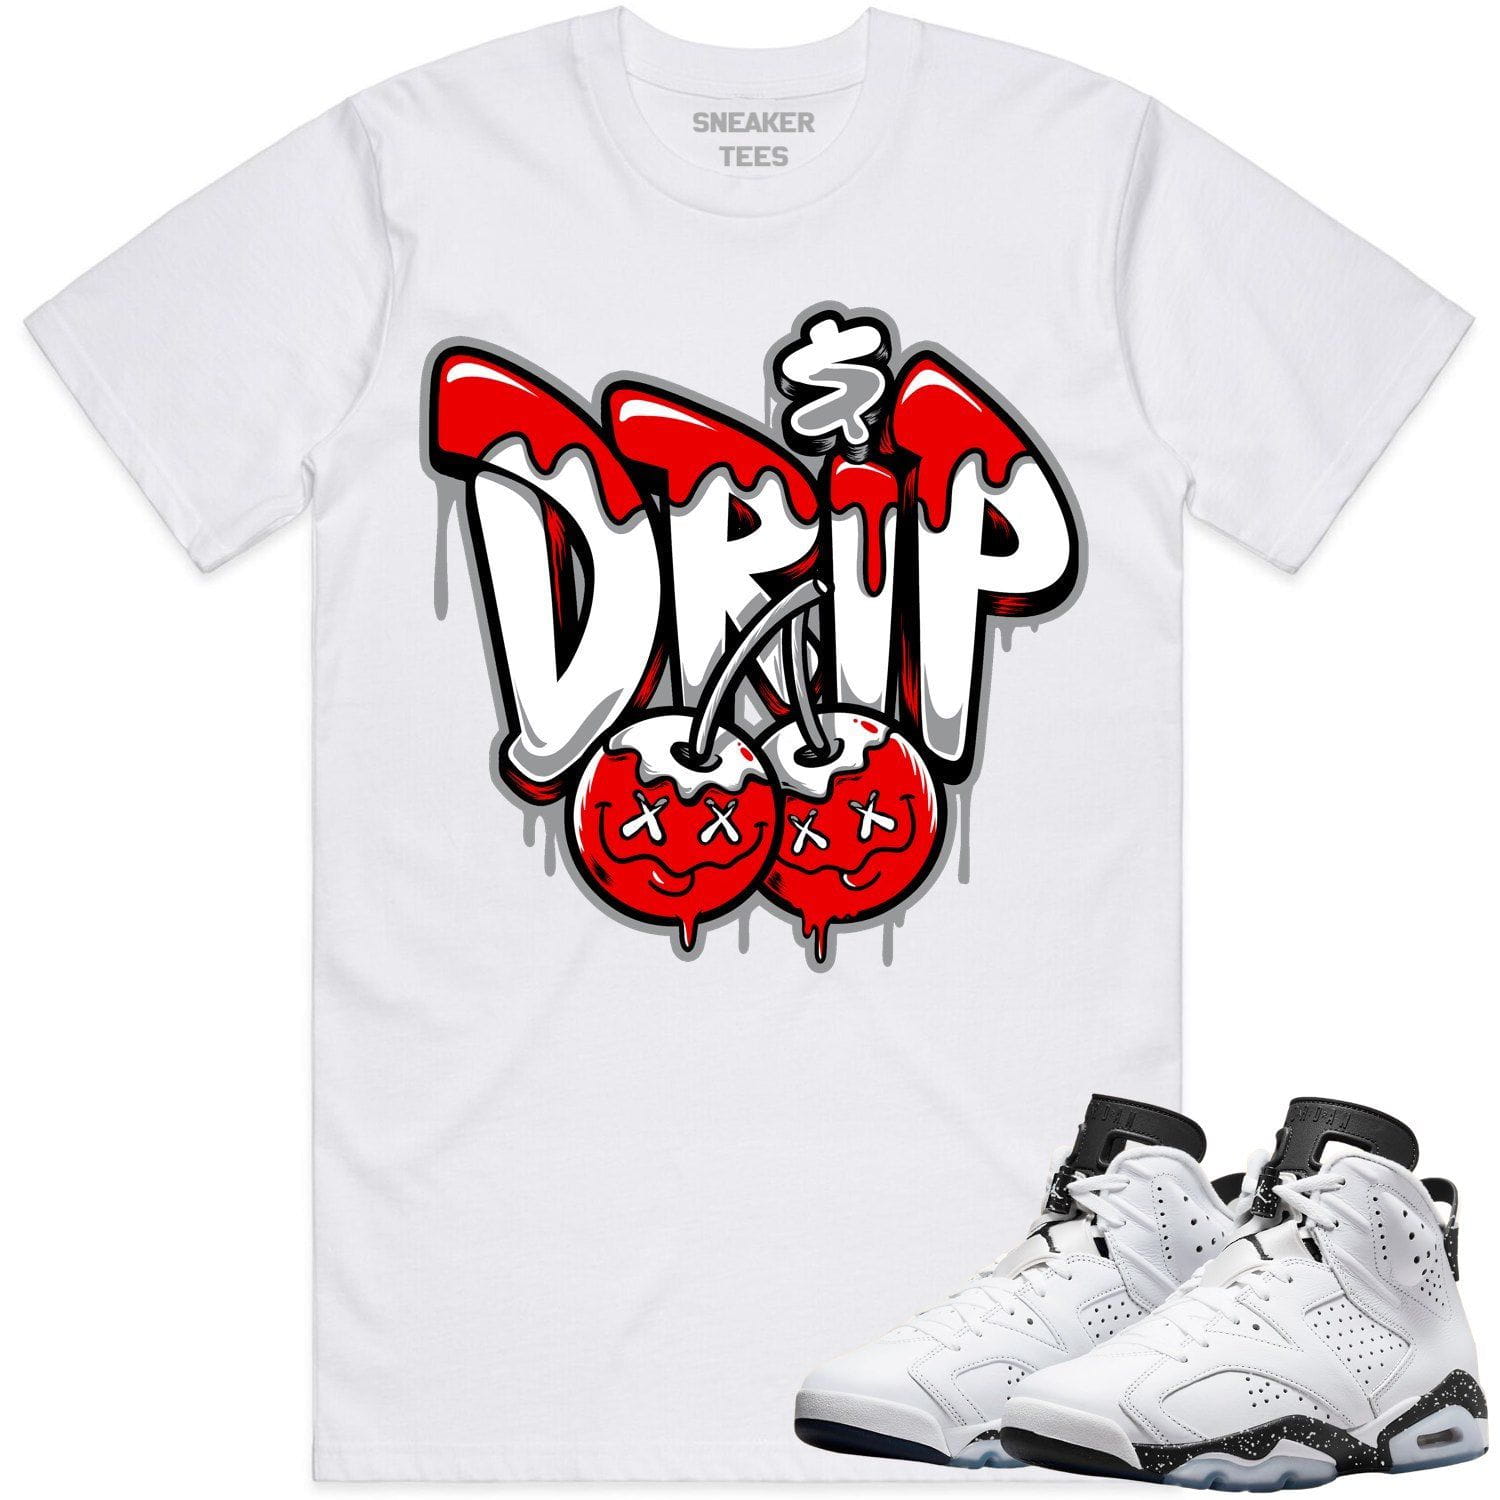 Oreo 6s Shirts - Jordan 6 Reverse Oreo 6s Sneaker Tees - Money Drip